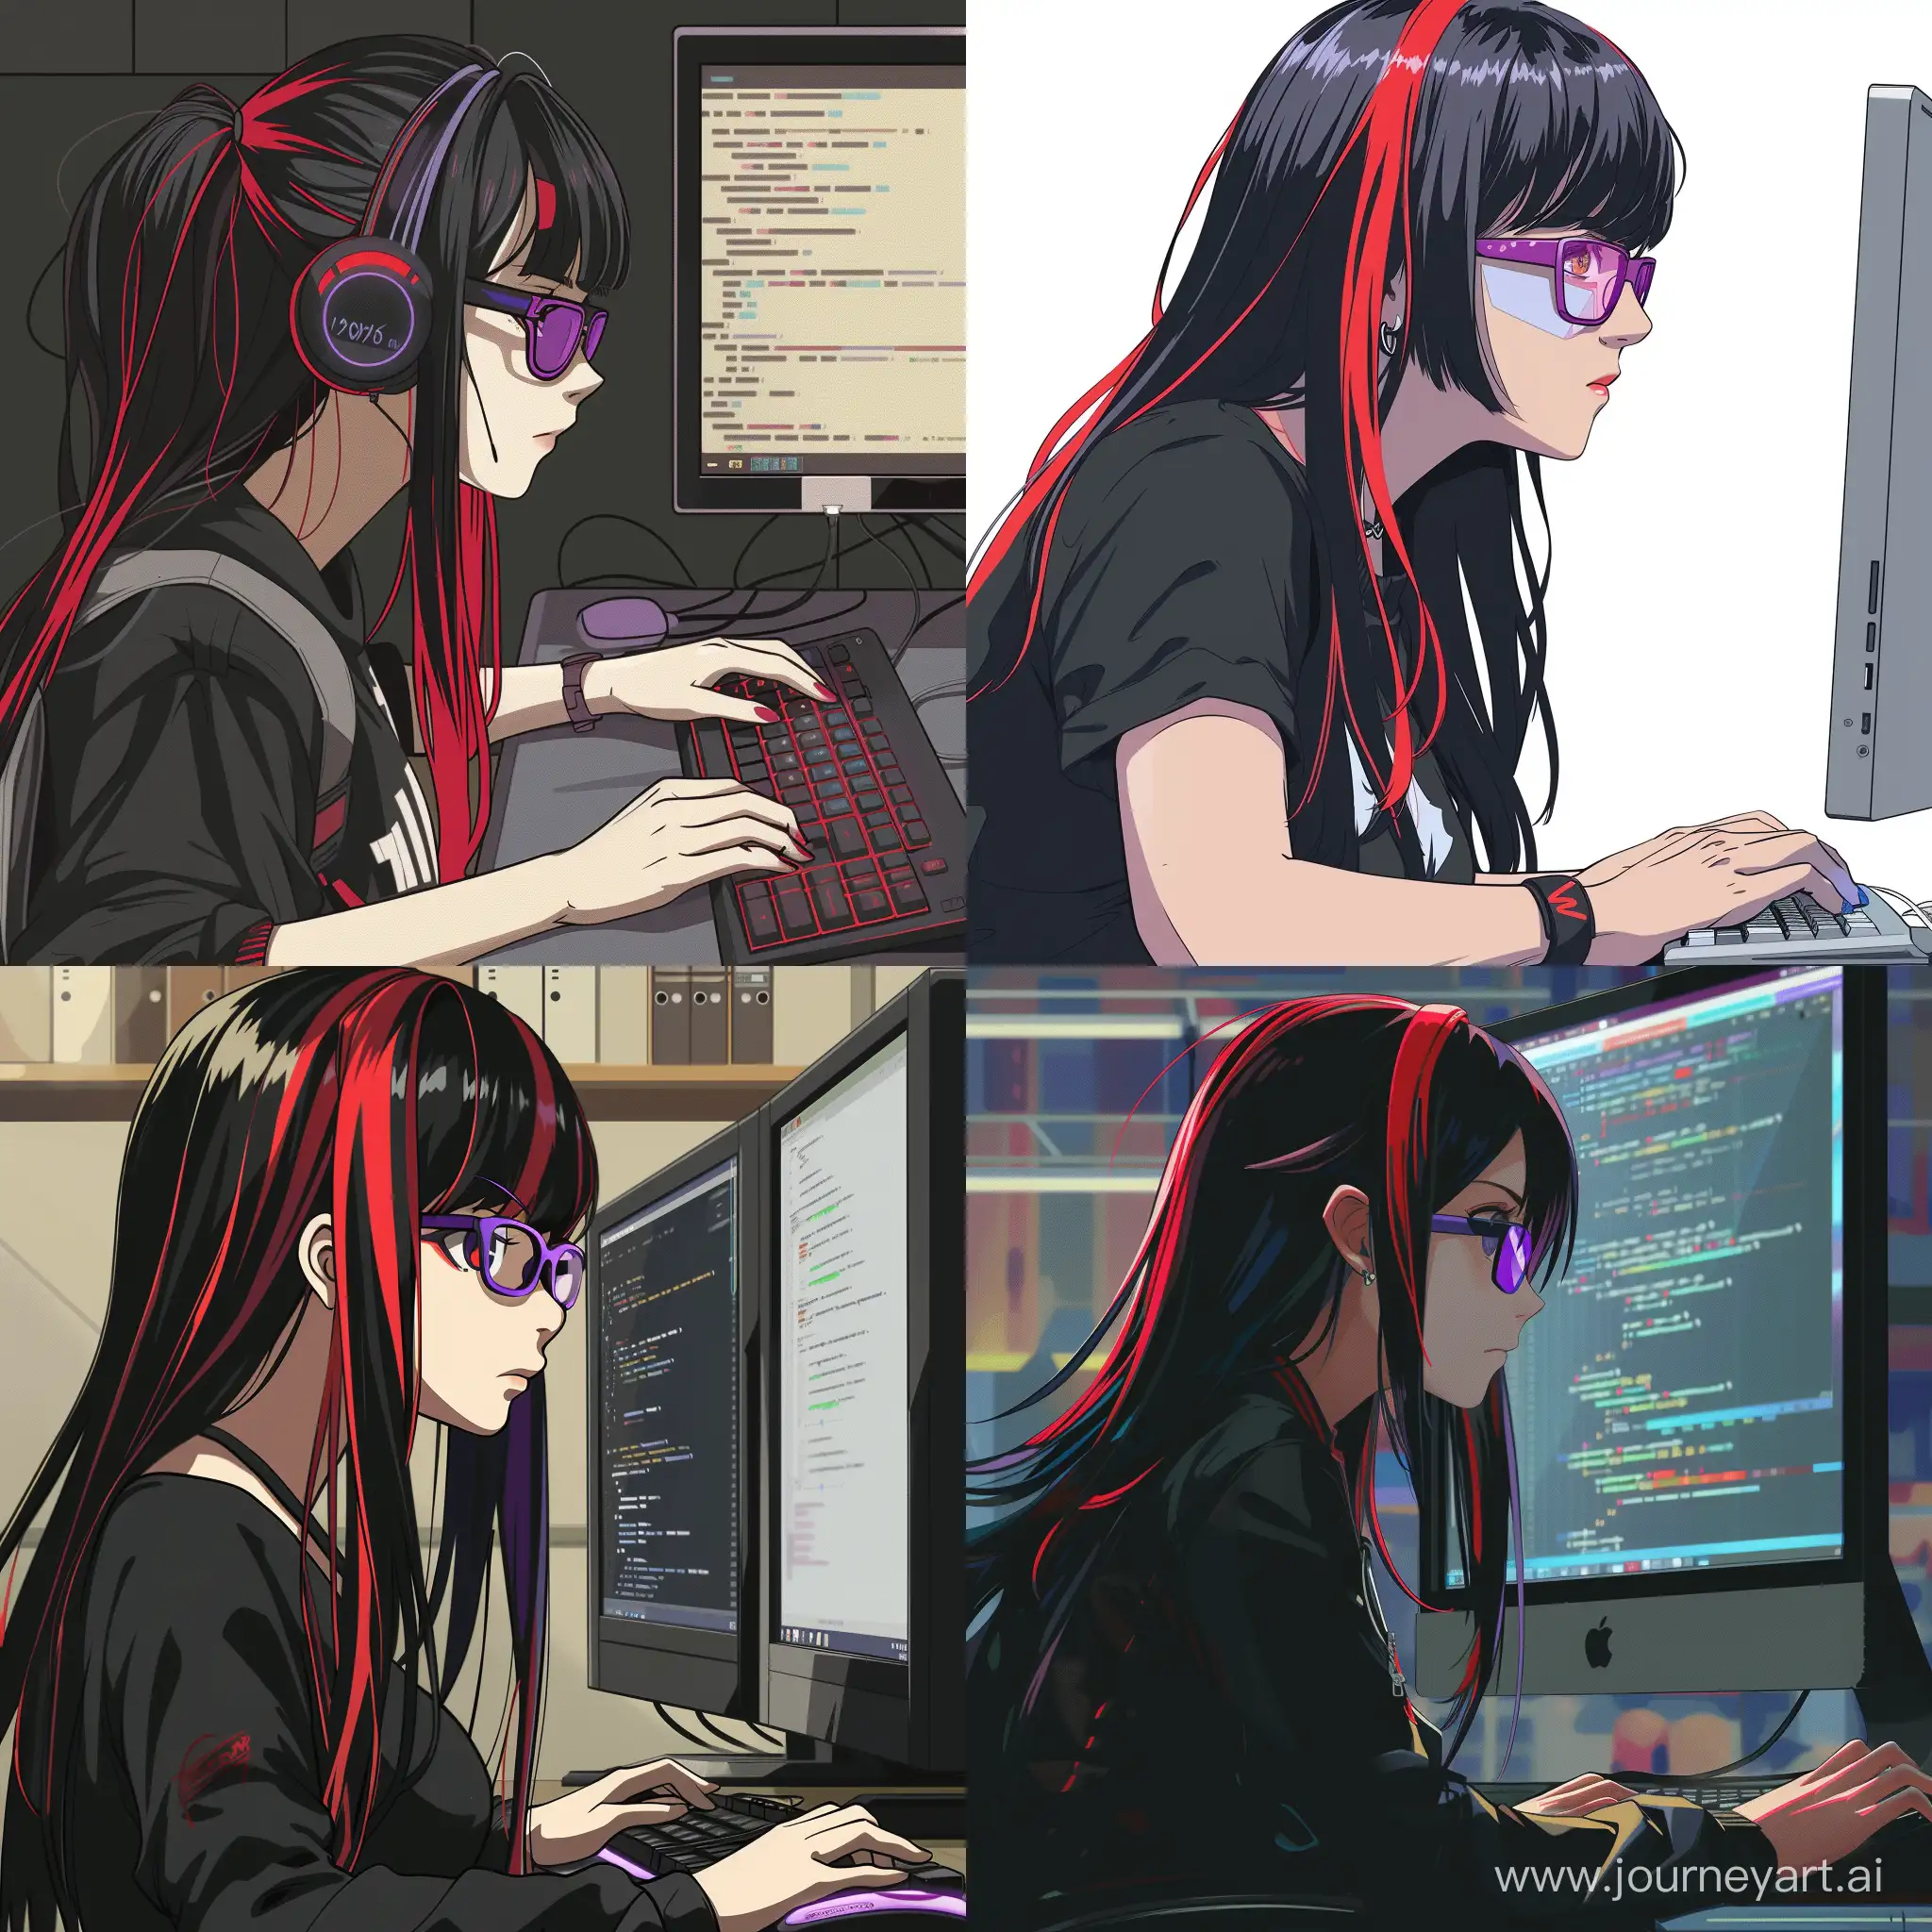 Manga-Shonen-Woman-Programming-Python-with-Red-Streaks-and-Rectangular-Glasses